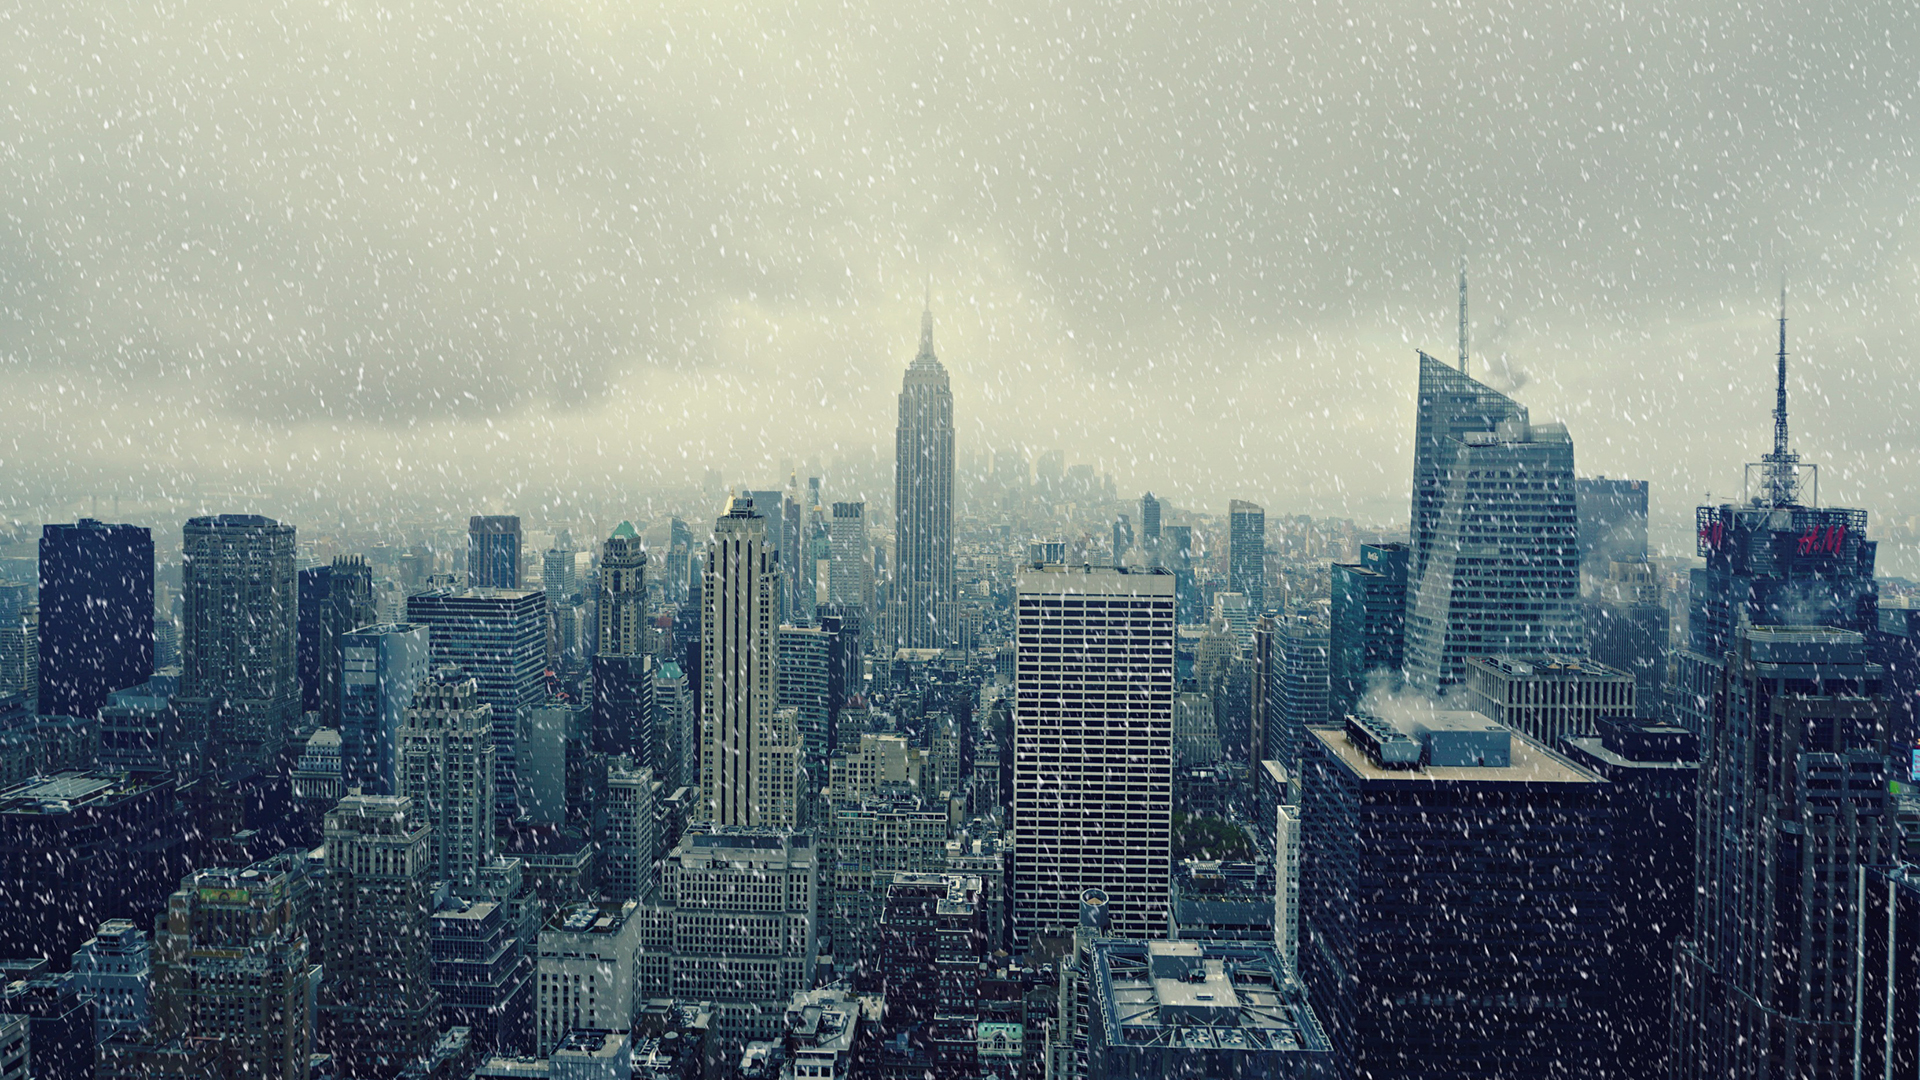 Fond d'ecran New-York sous la neige